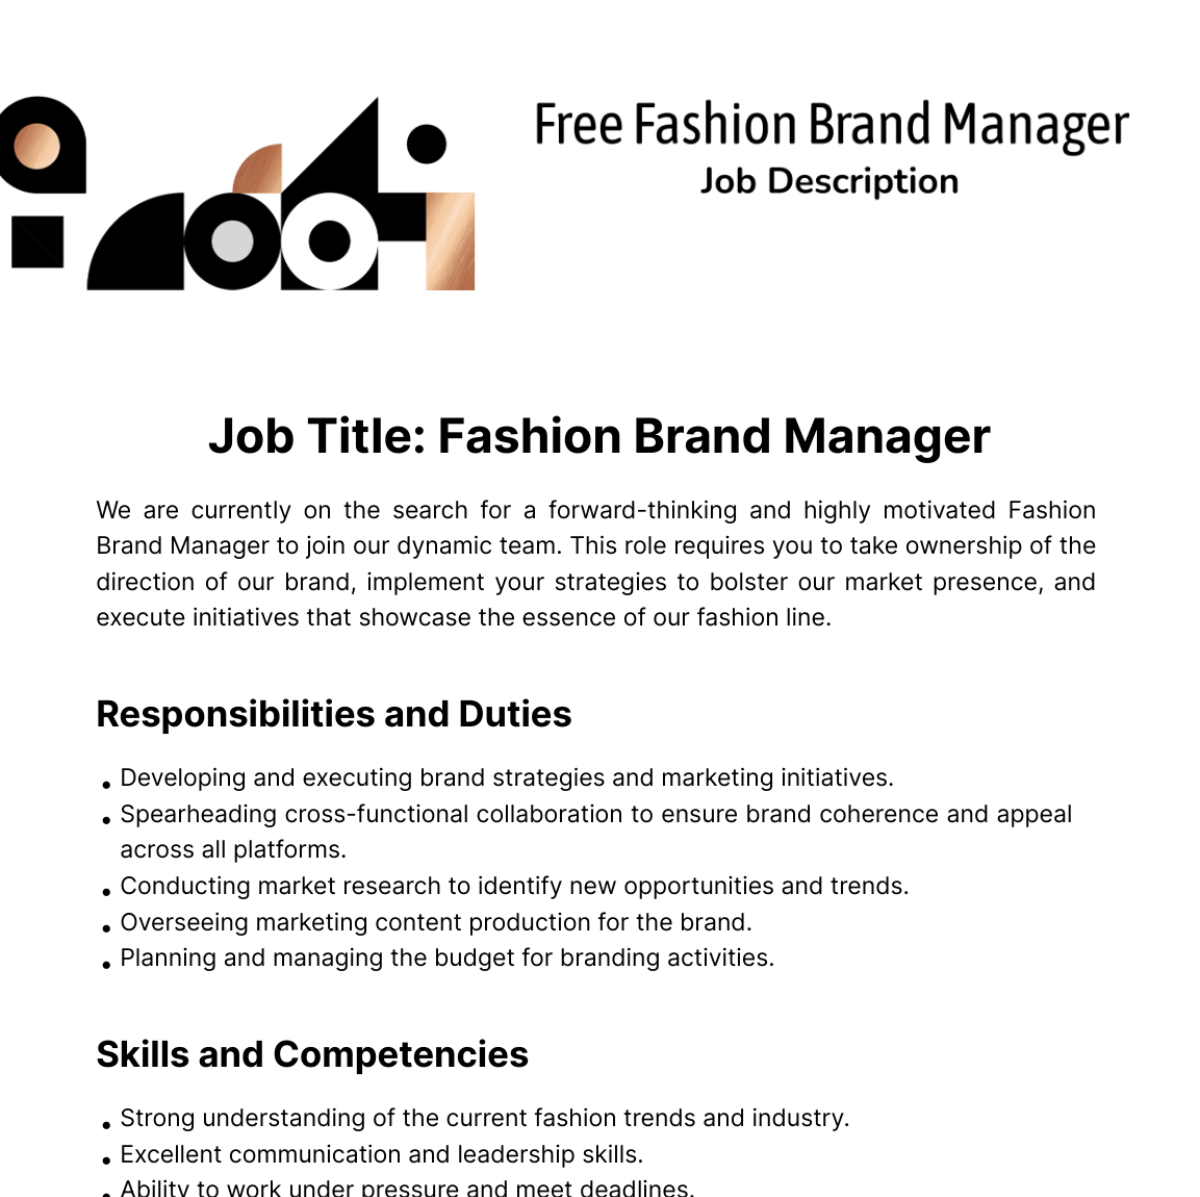 Free Fashion Brand Manager Job Description Template